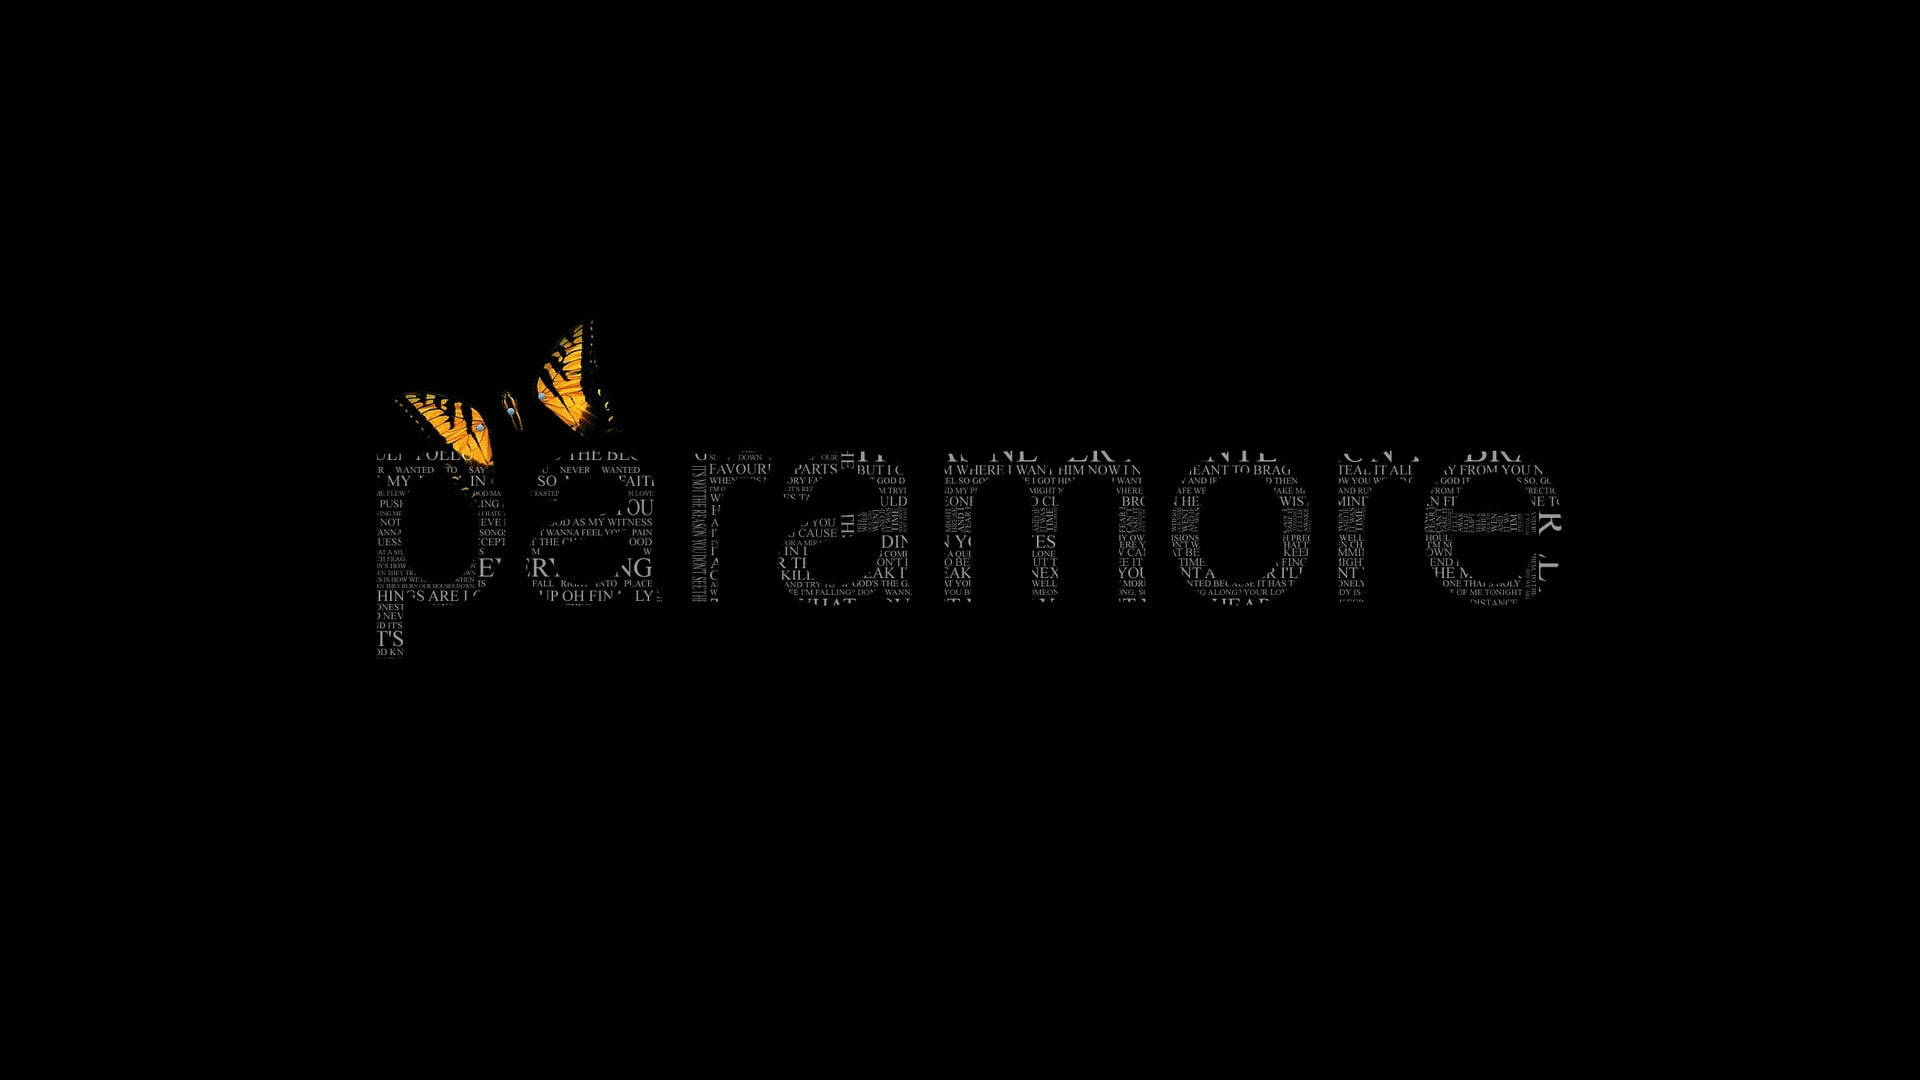 Paramore Brand New Eyes